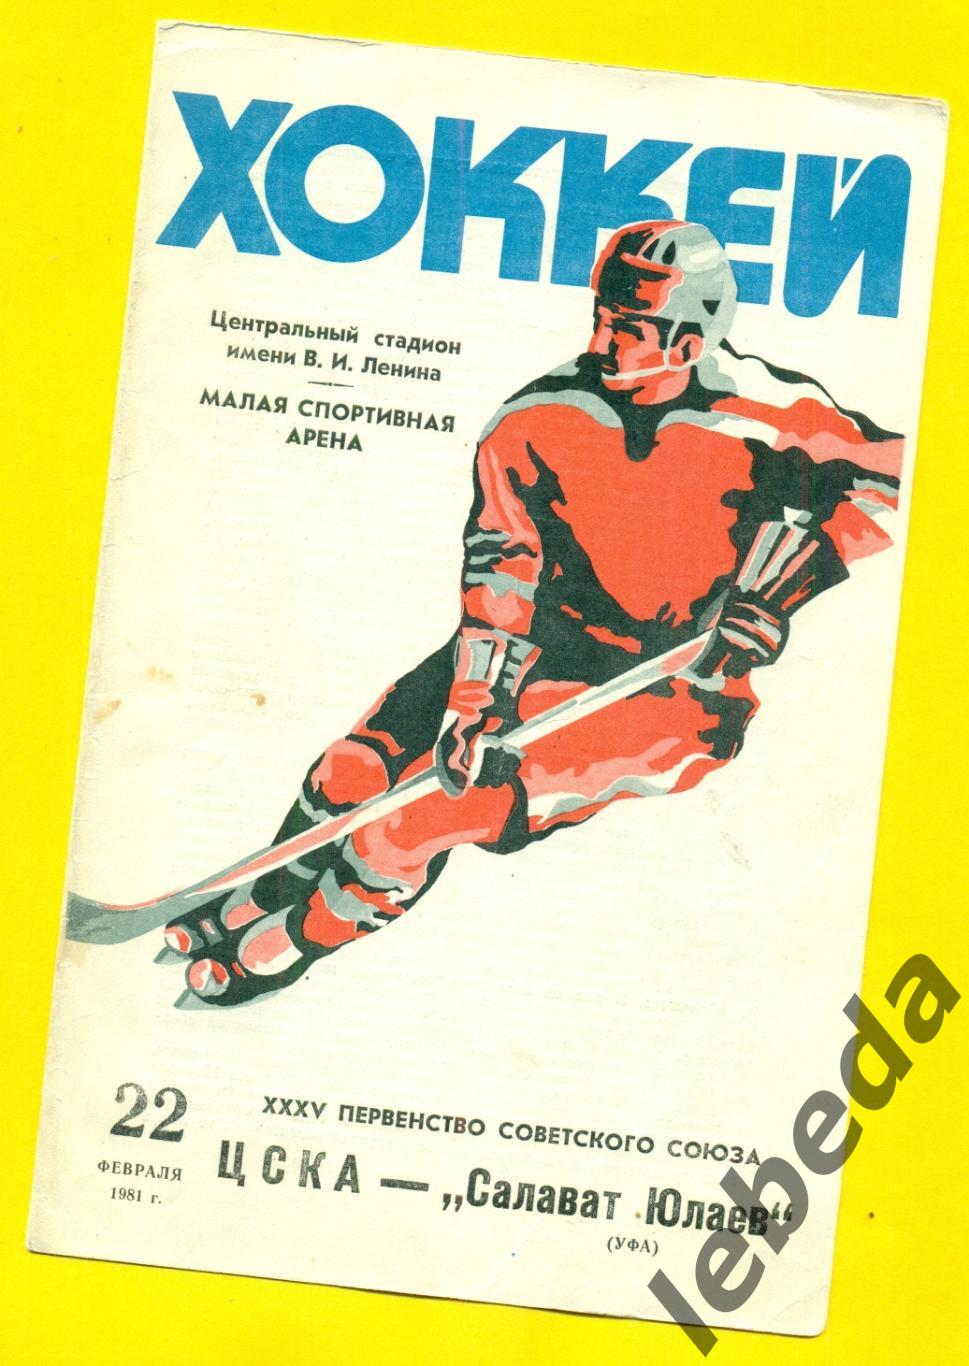 ЦСКА - Салават Юлаев Уфа - 1980 / 1981 год. (22.02.81.)